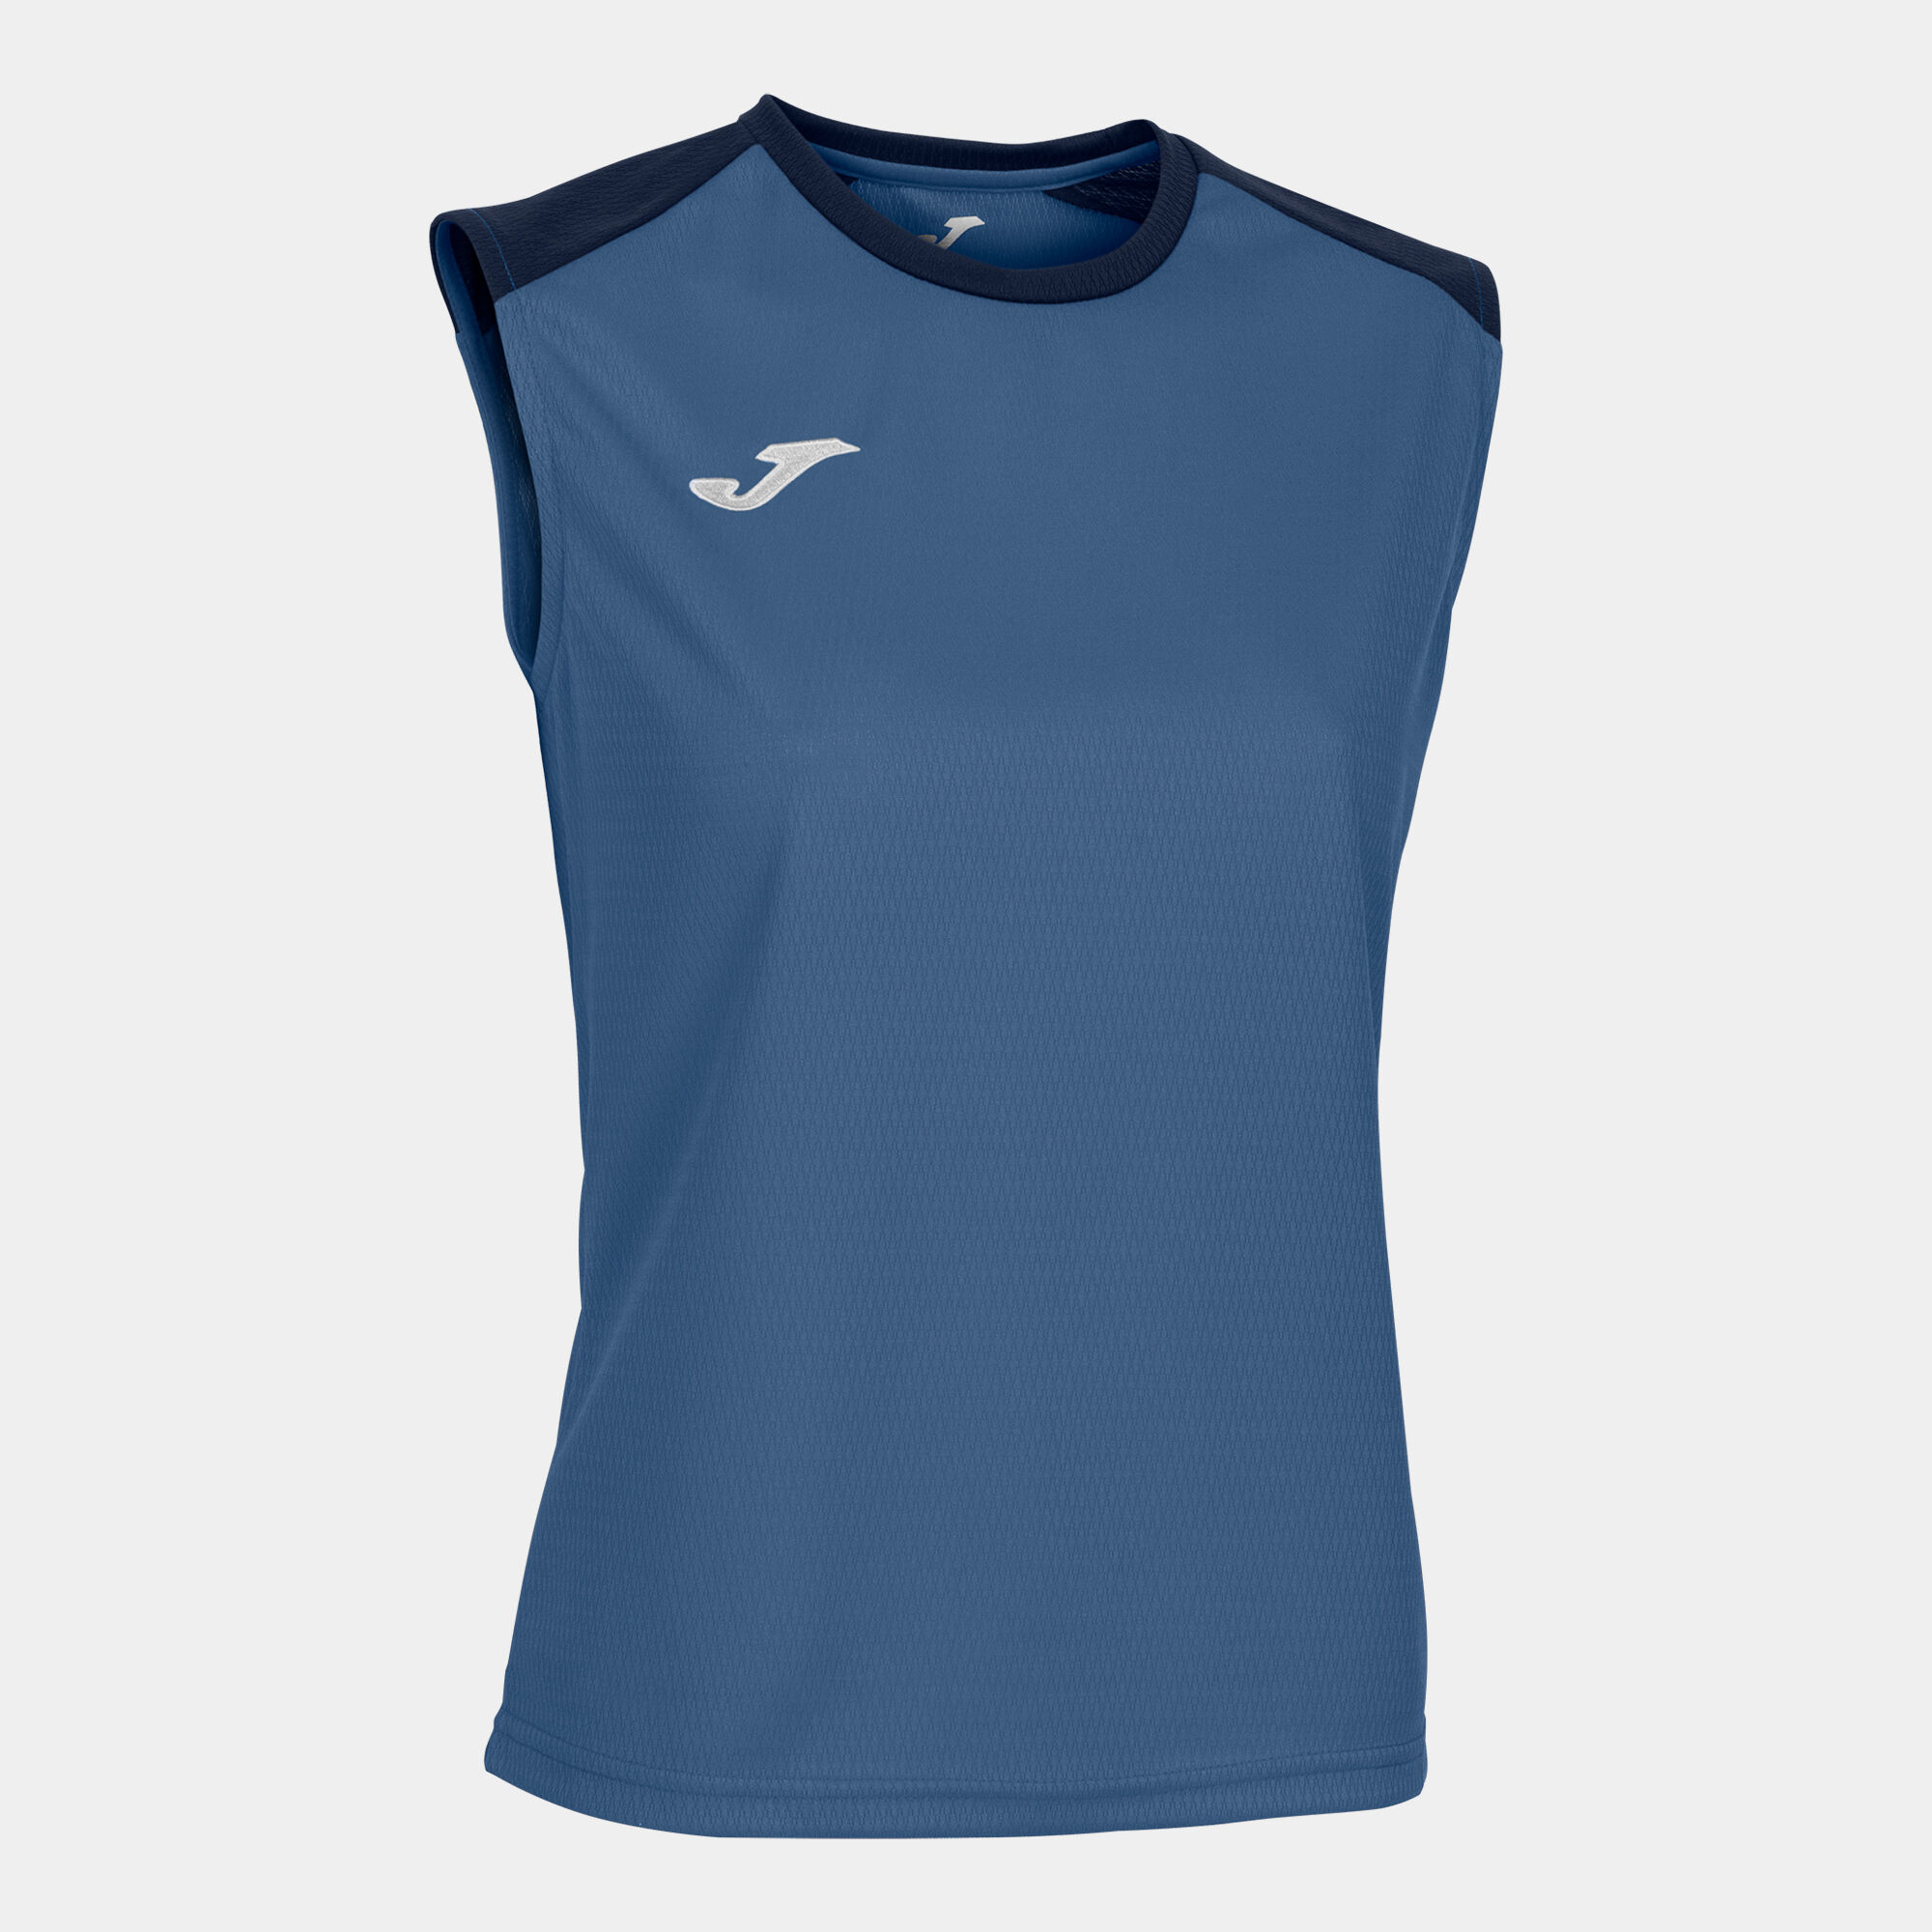 Schulterriemen-shirt frau Eco Championship blau marineblau